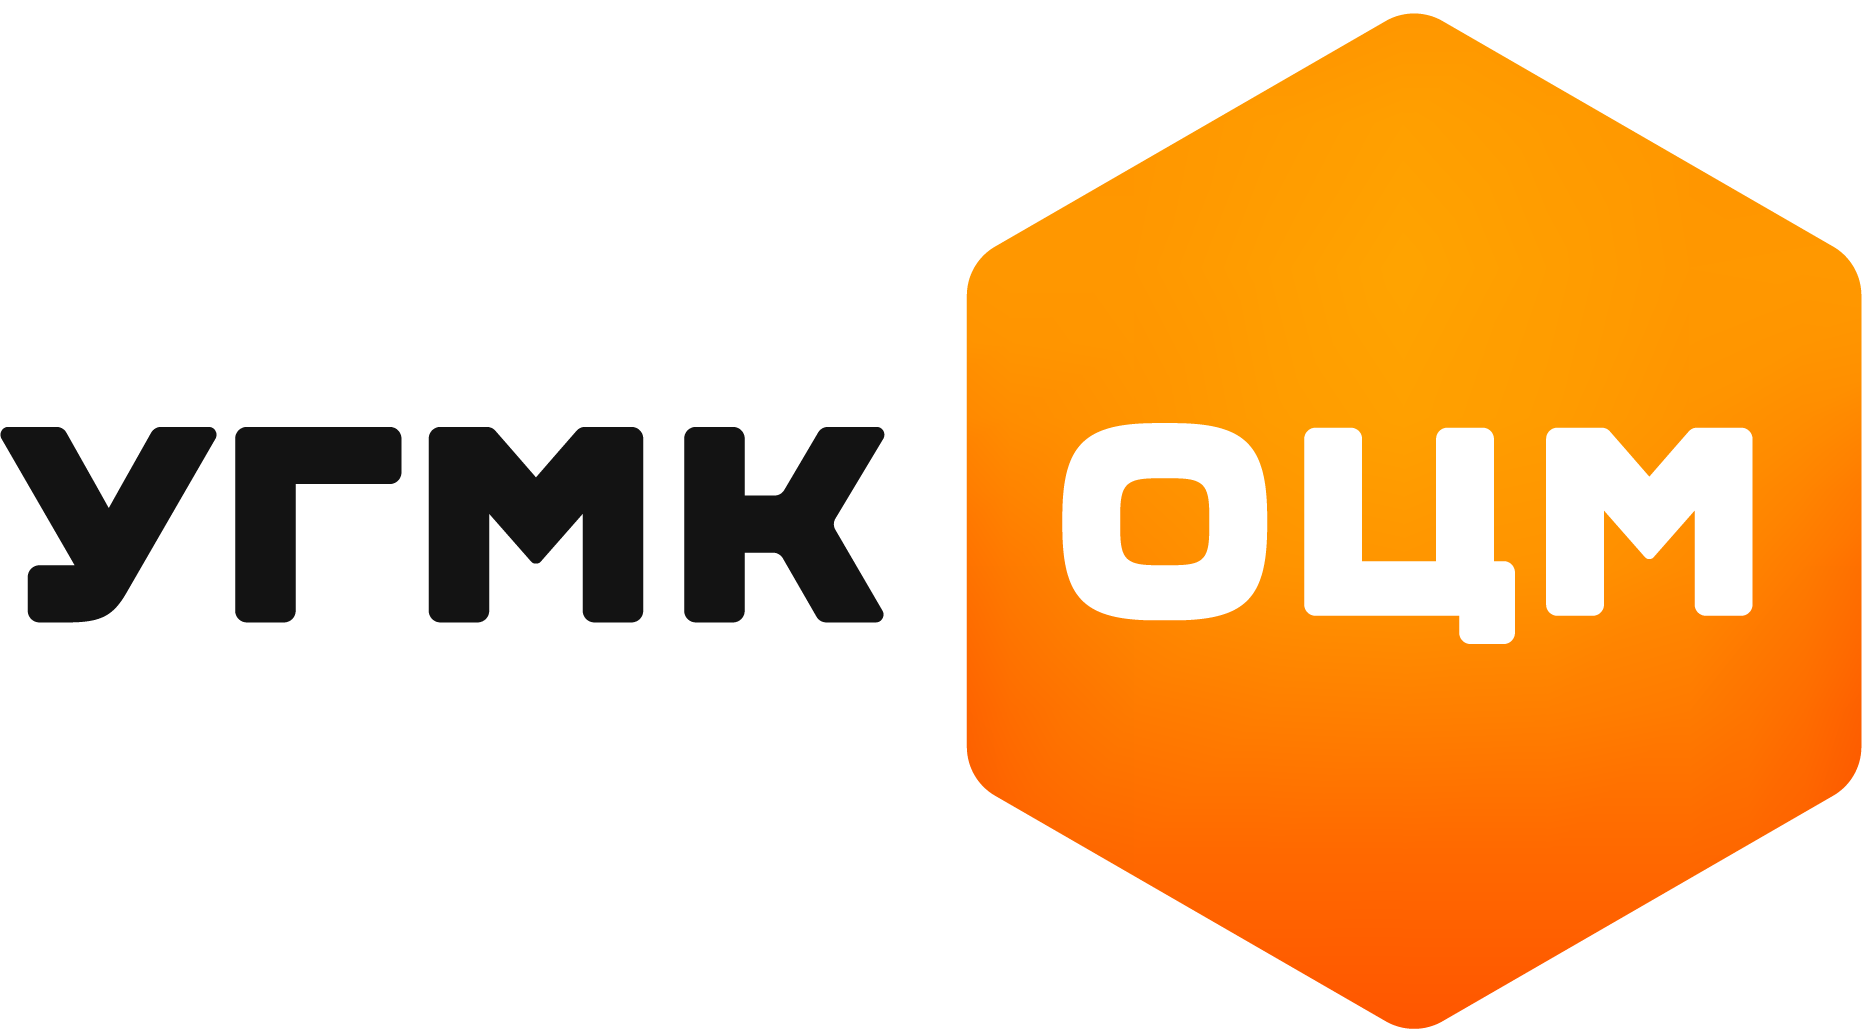 UGMK OCM logo.png. 